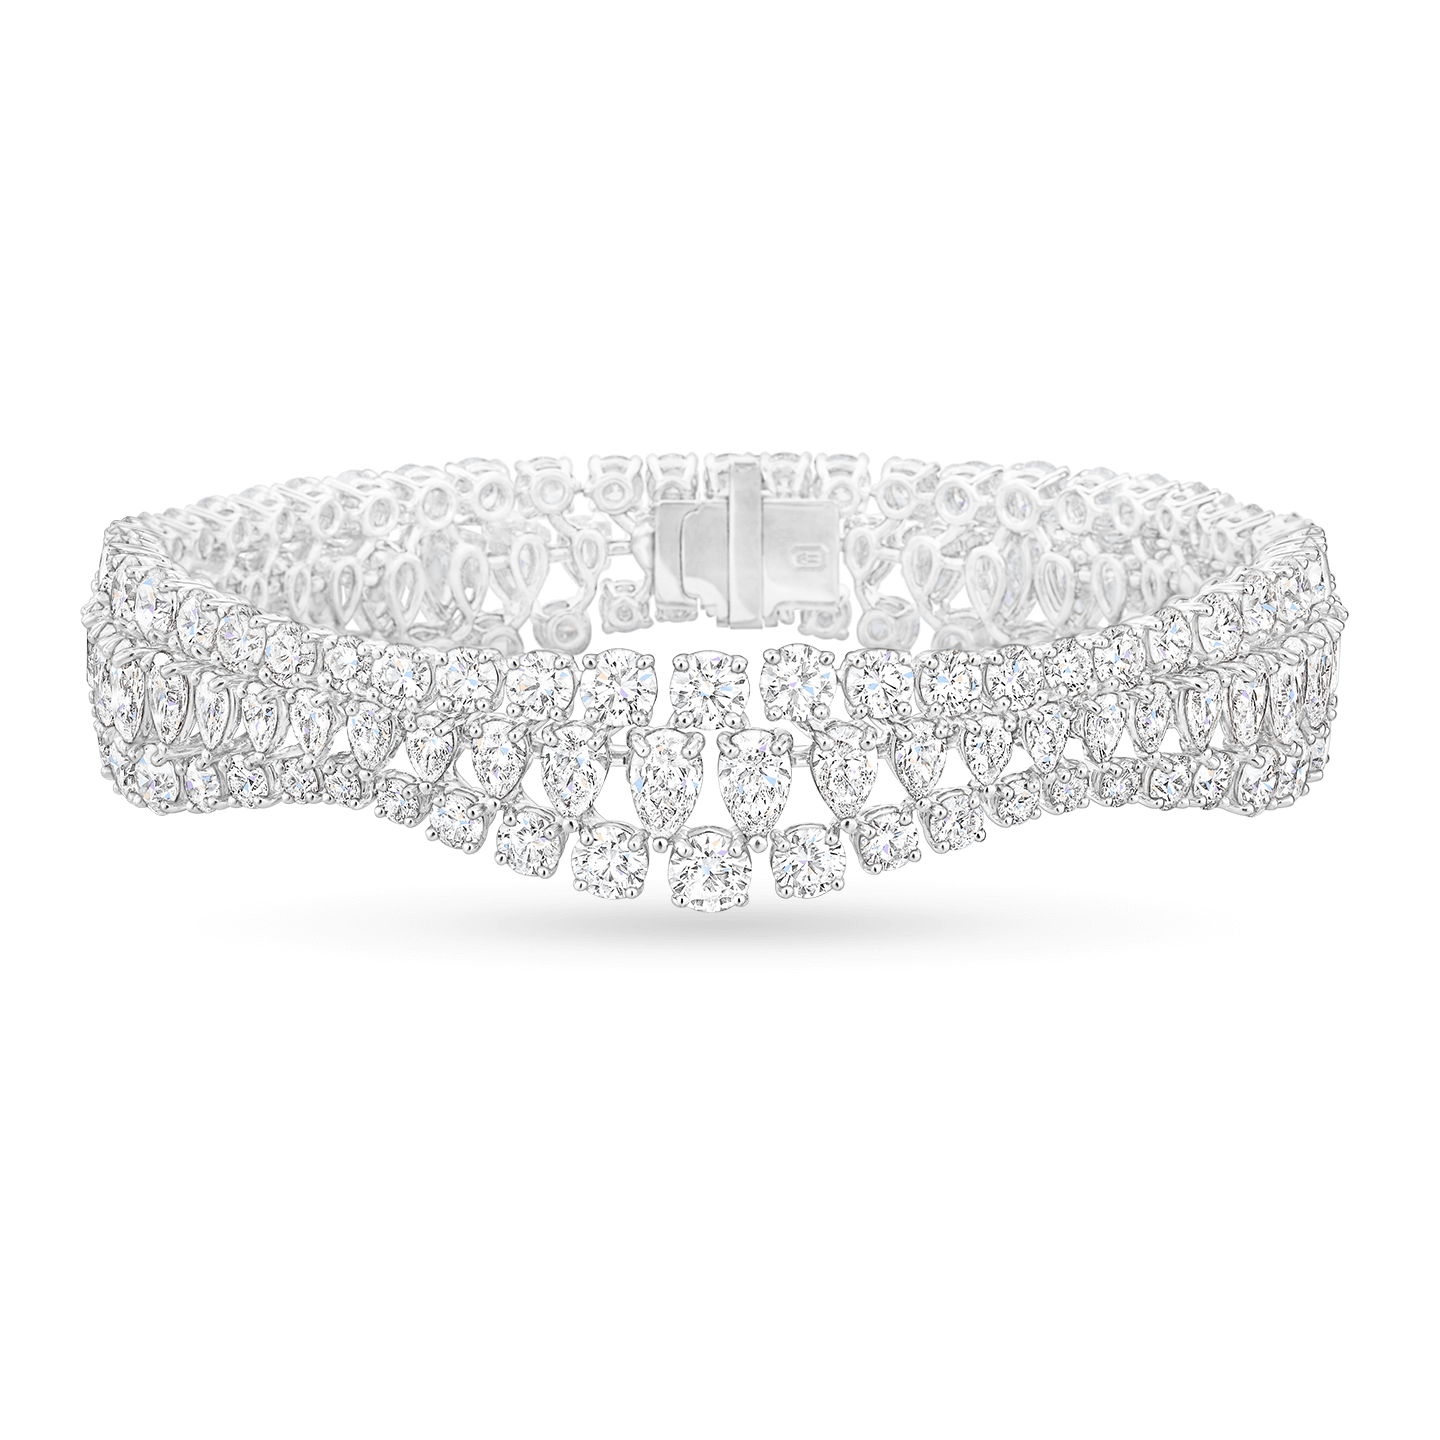 1947 Harry Winston Diamond Bracelet Seven Wonders vintage Jewelry ad | eBay